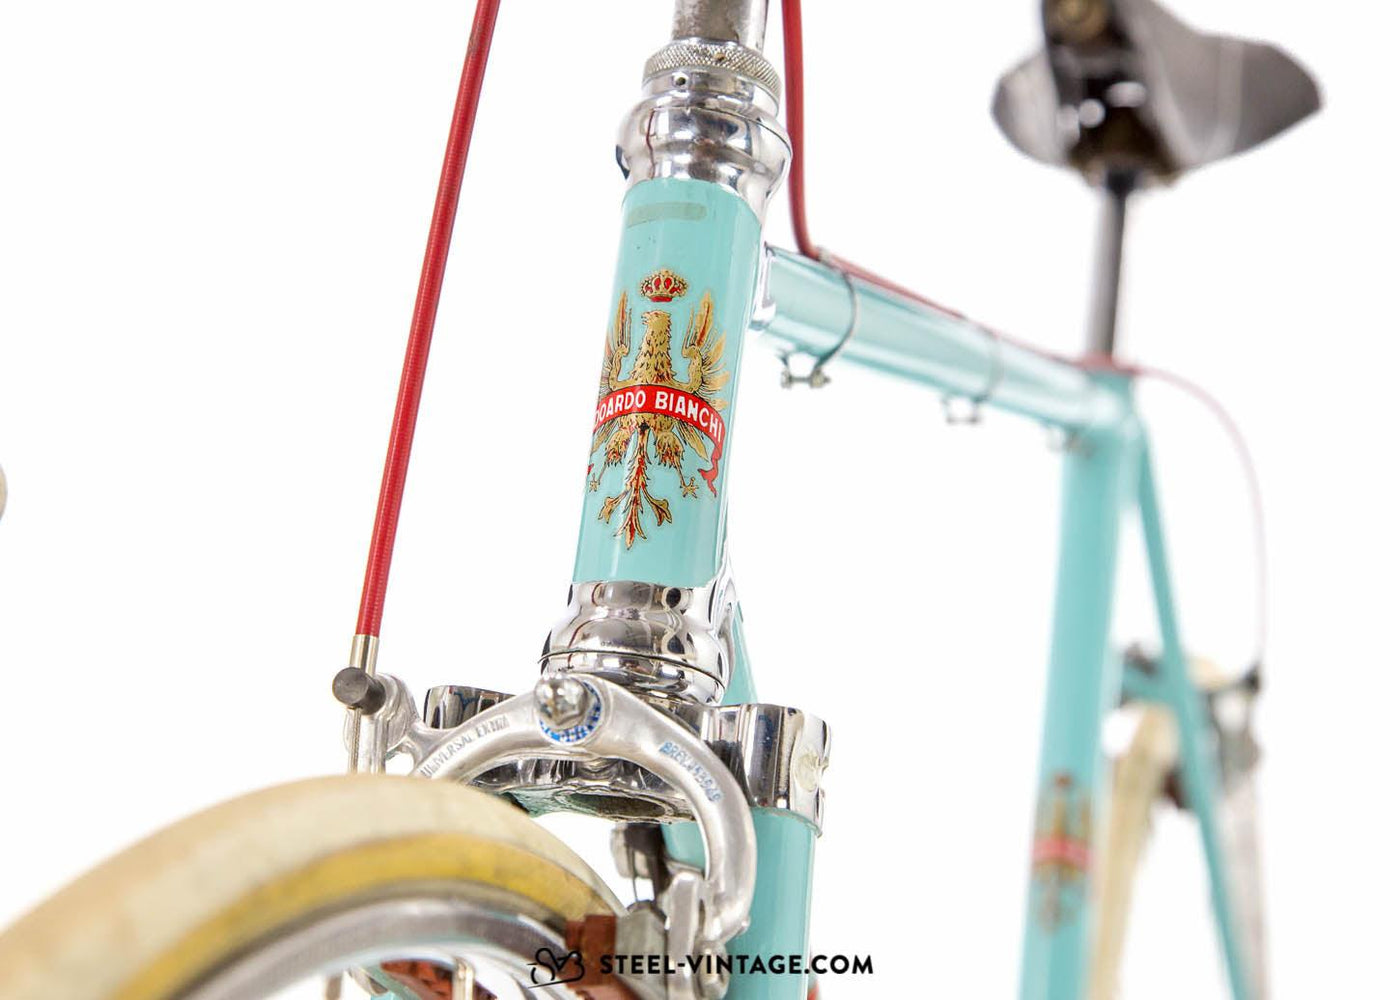 Bianchi Freccia Classic Road Bike 1953 - Steel Vintage Bikes